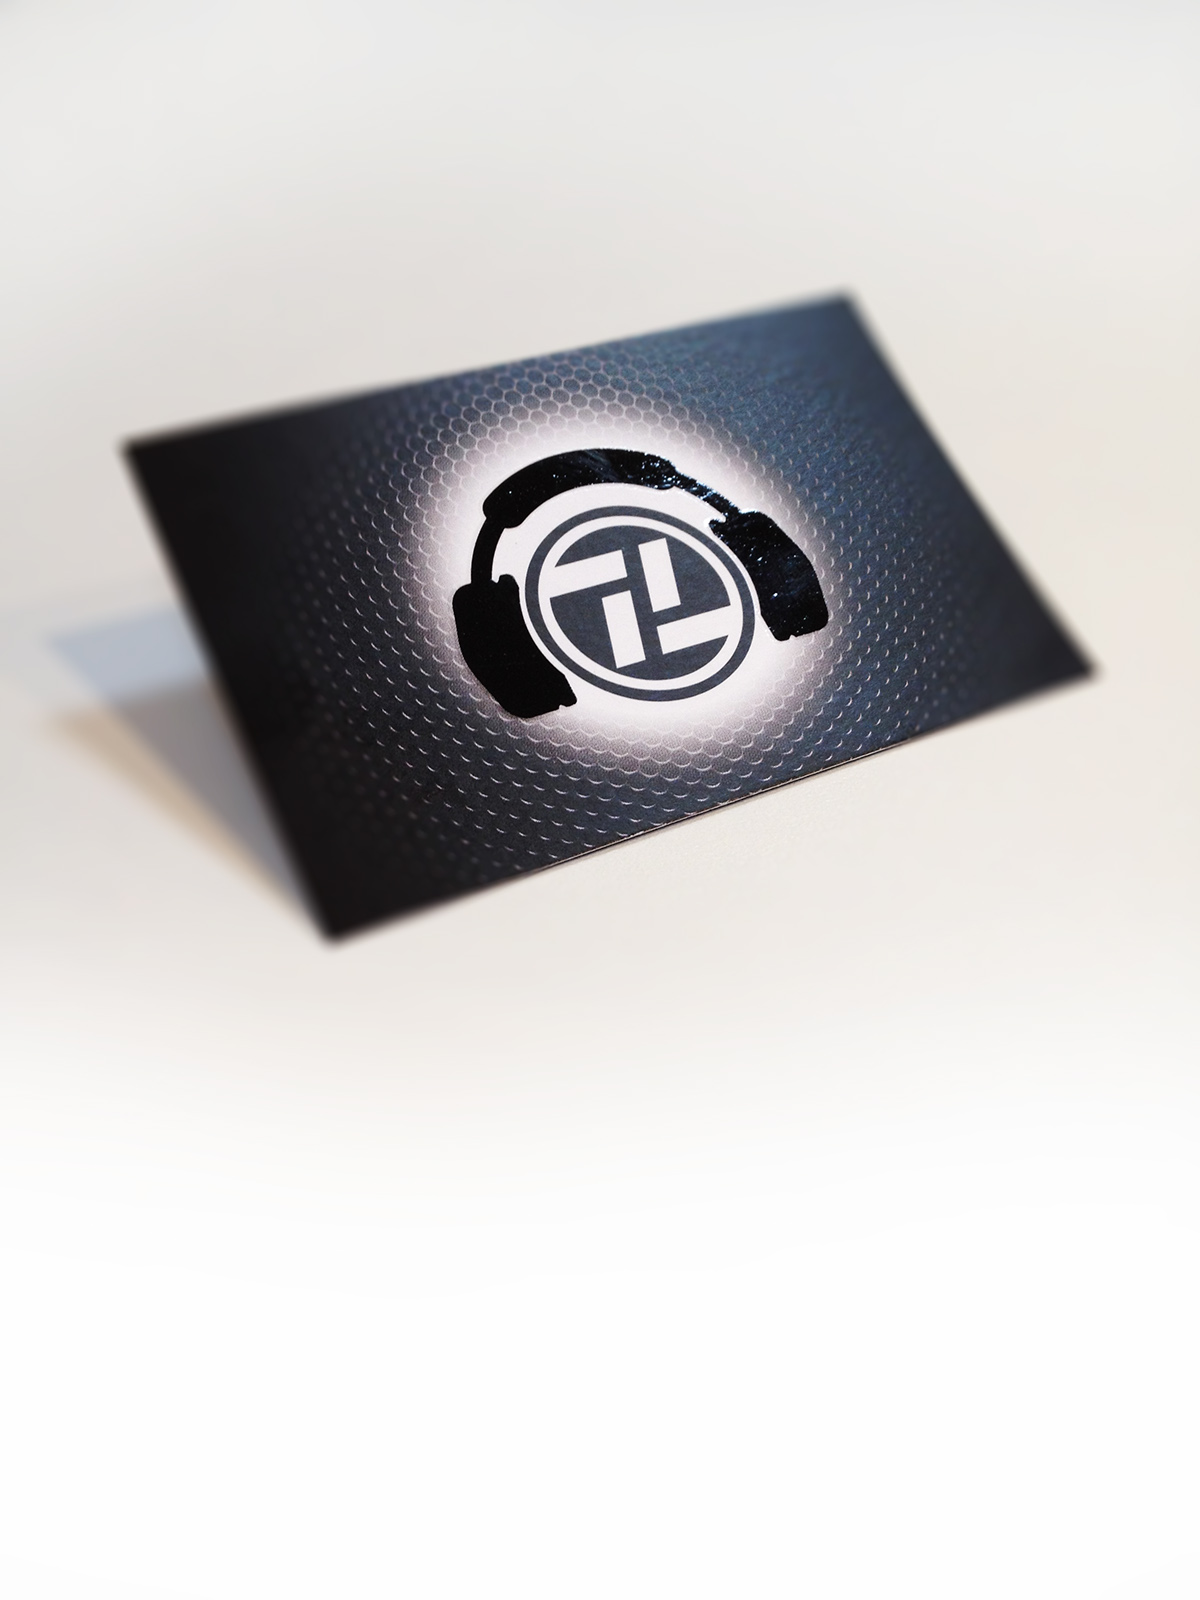 djtomleclercq logo sleeve cdcover Website businesscard